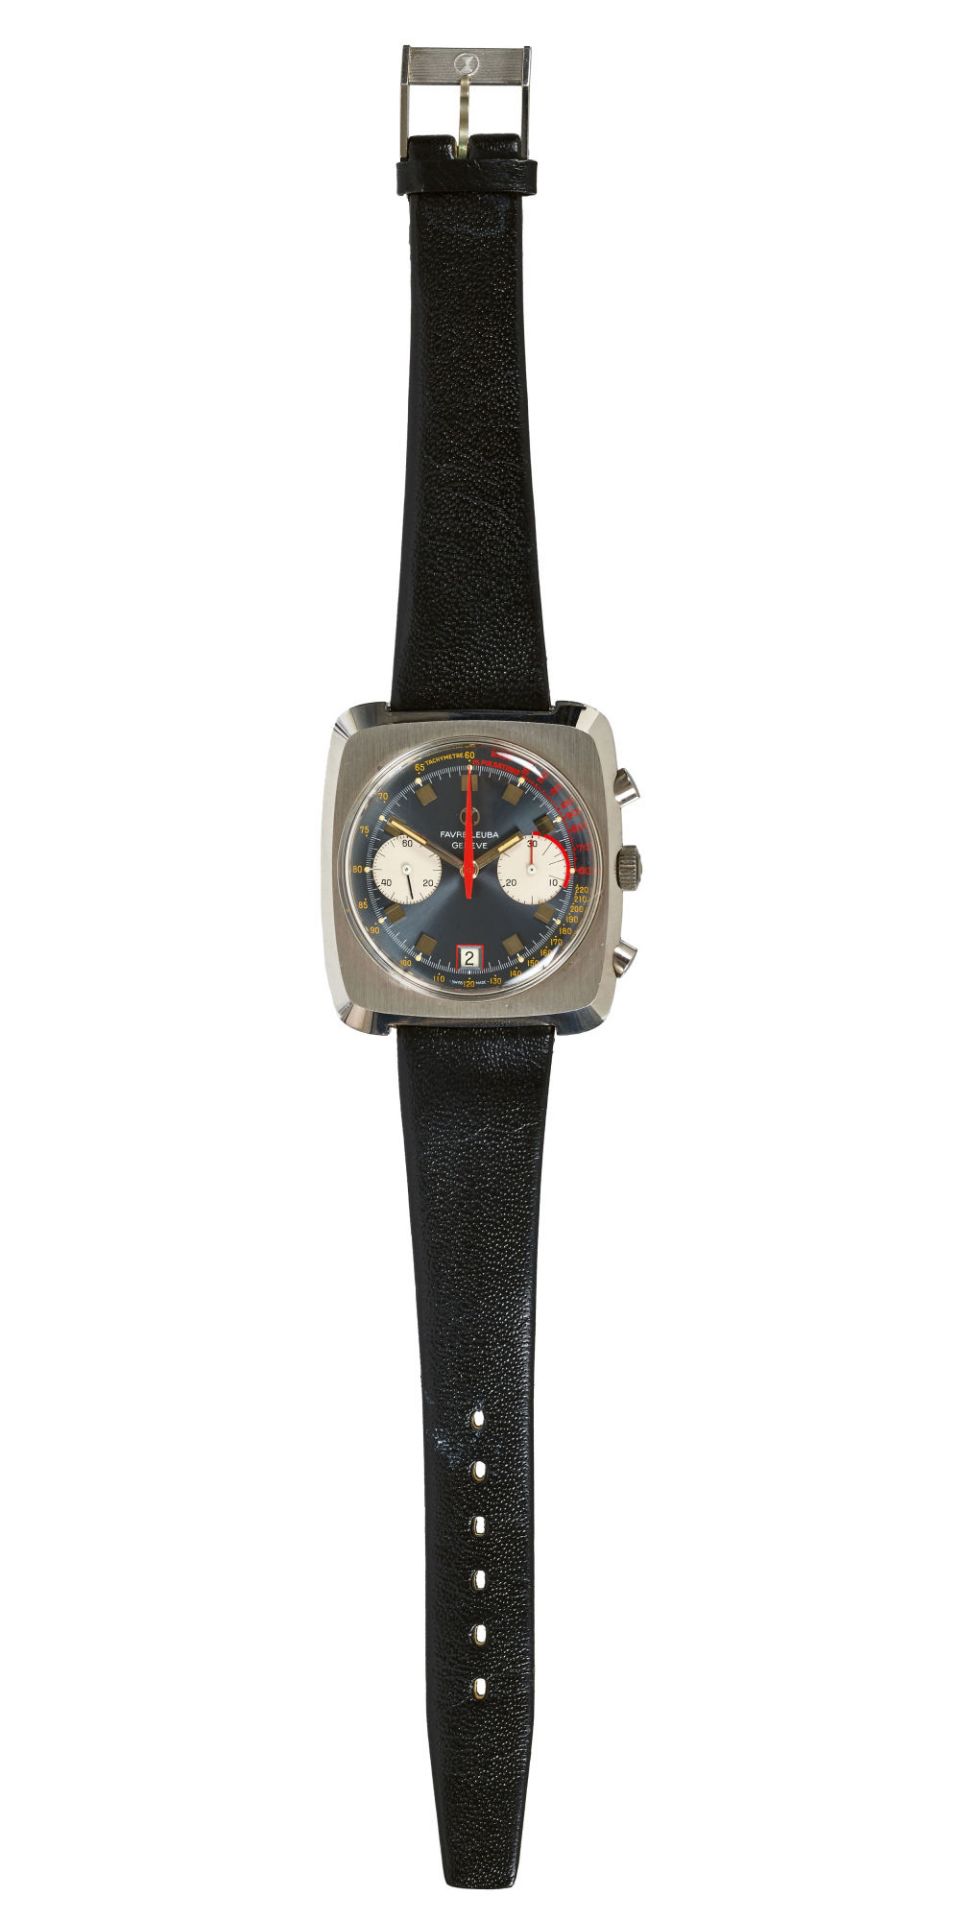 FAVRE-LEUBA: Herrenarmbanduhr. / Favre-Leuba, Gentleman's wristwatch. - Bild 3 aus 3